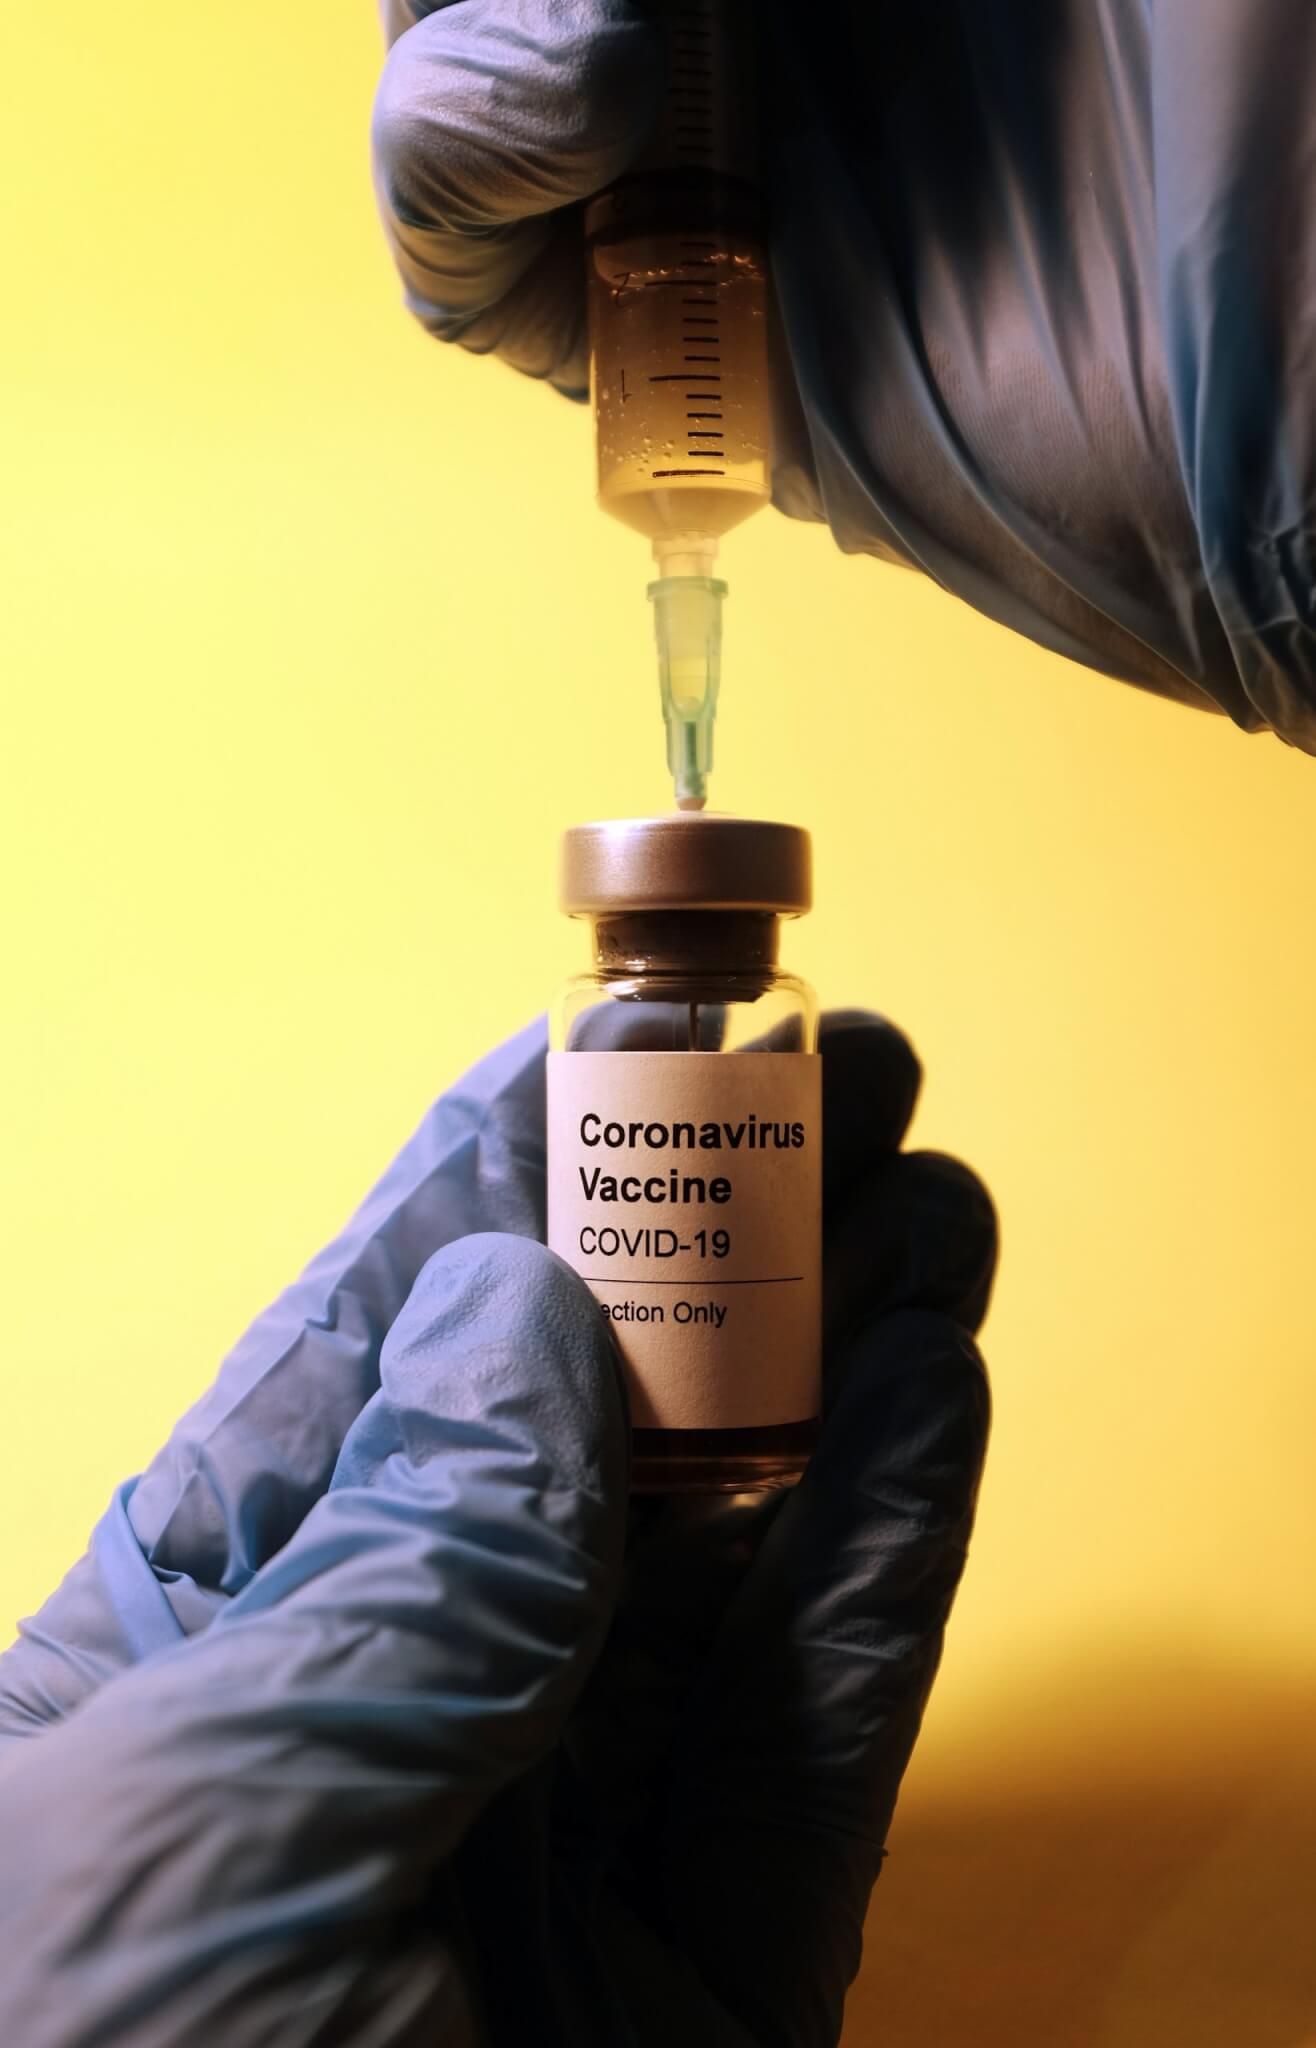 Full FDA approval of Pfizer vaccine ‘a key milestone,’ Biden says